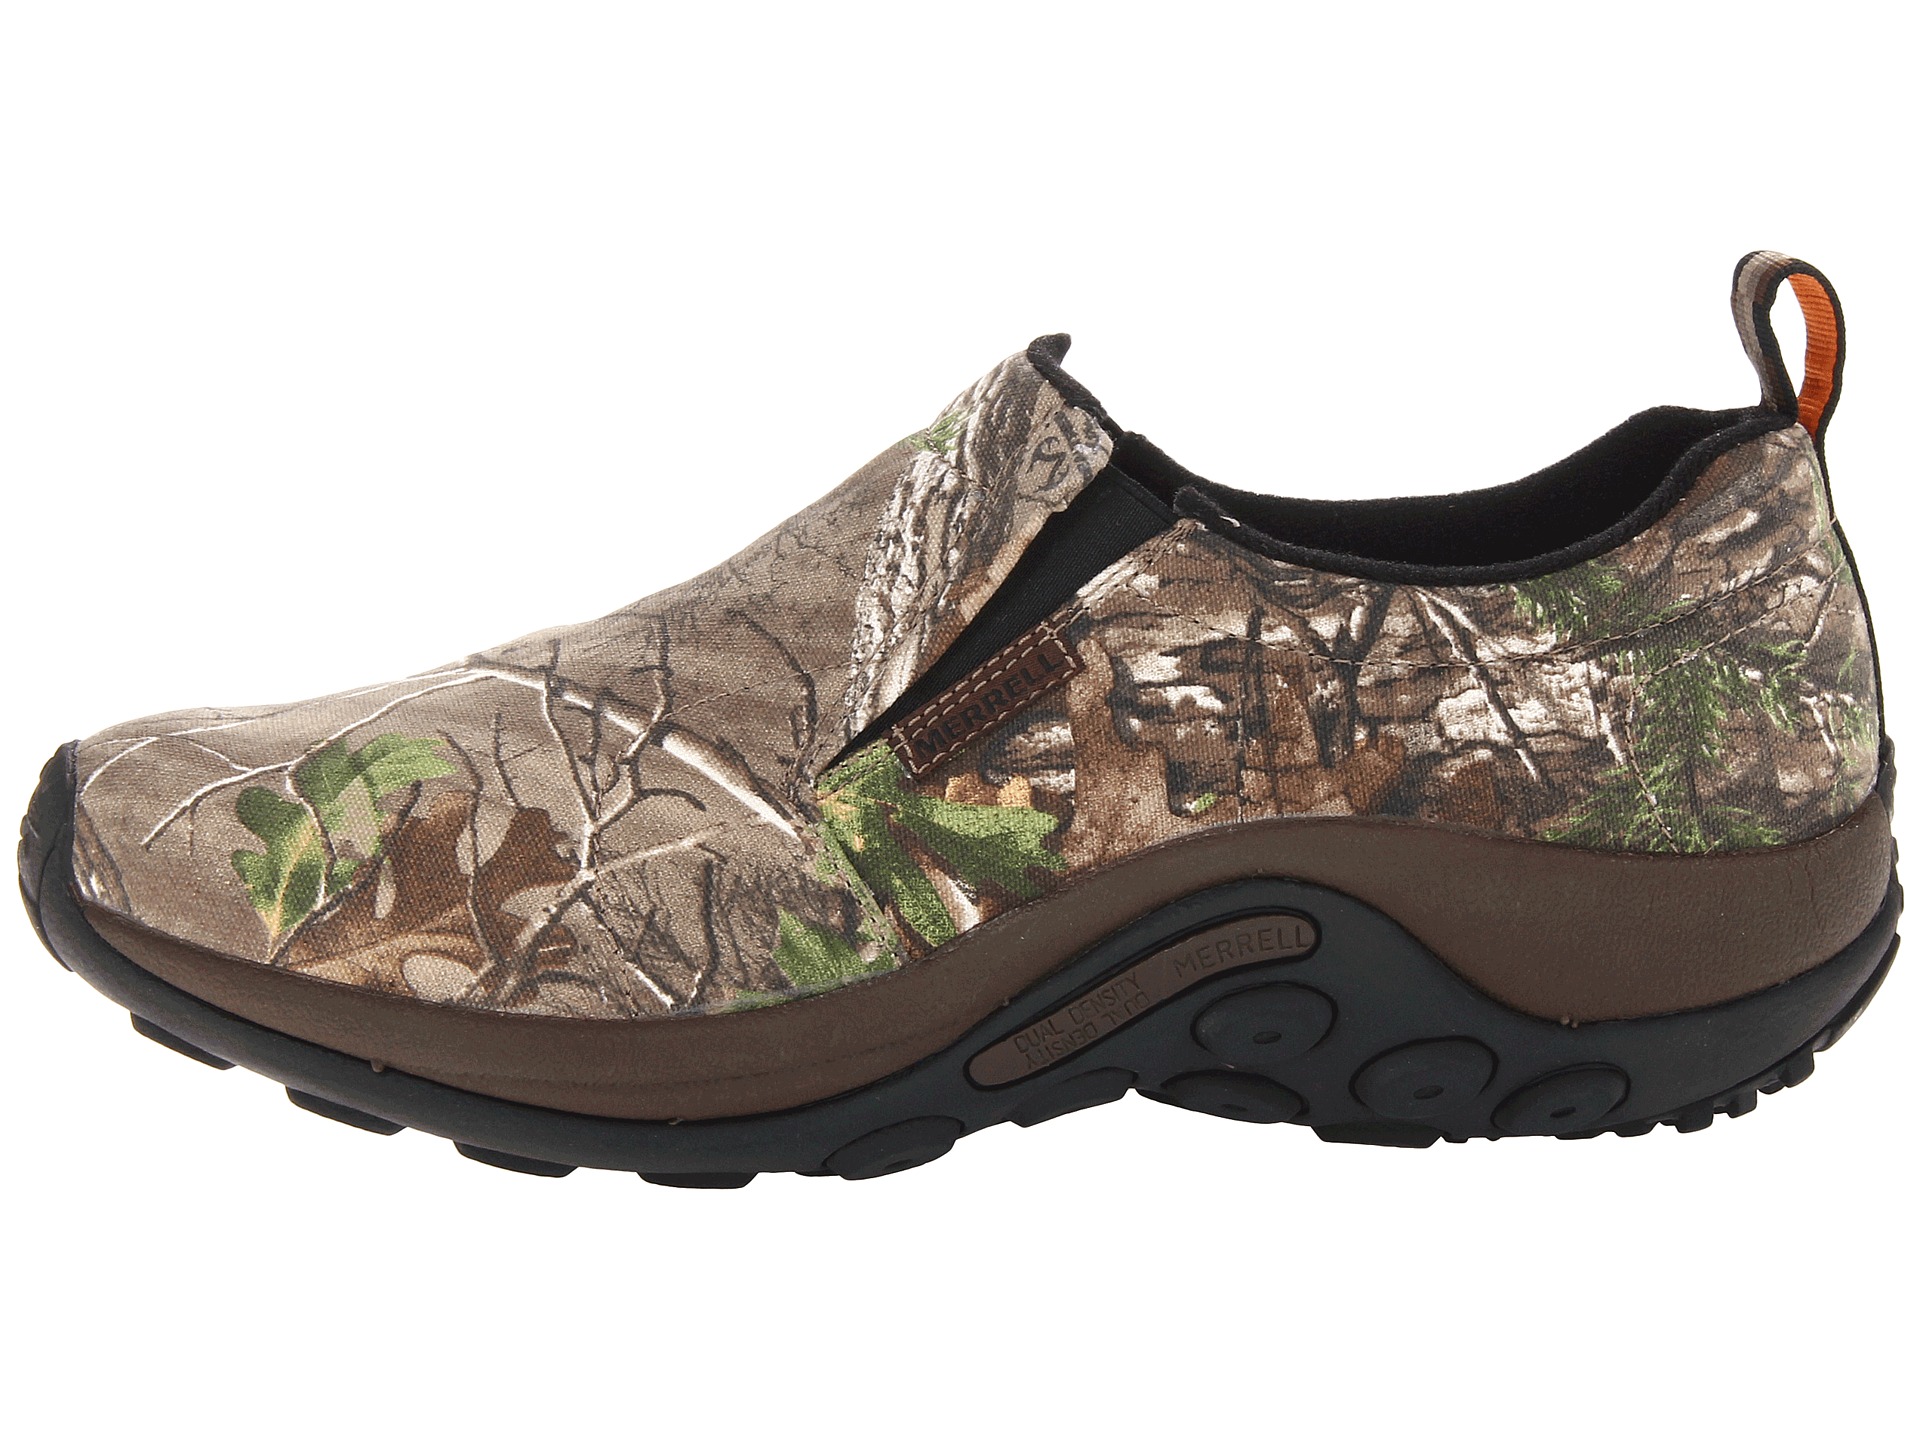 Merrell Jungle Moc Camo, Shoes | Shipped Free at Zappos